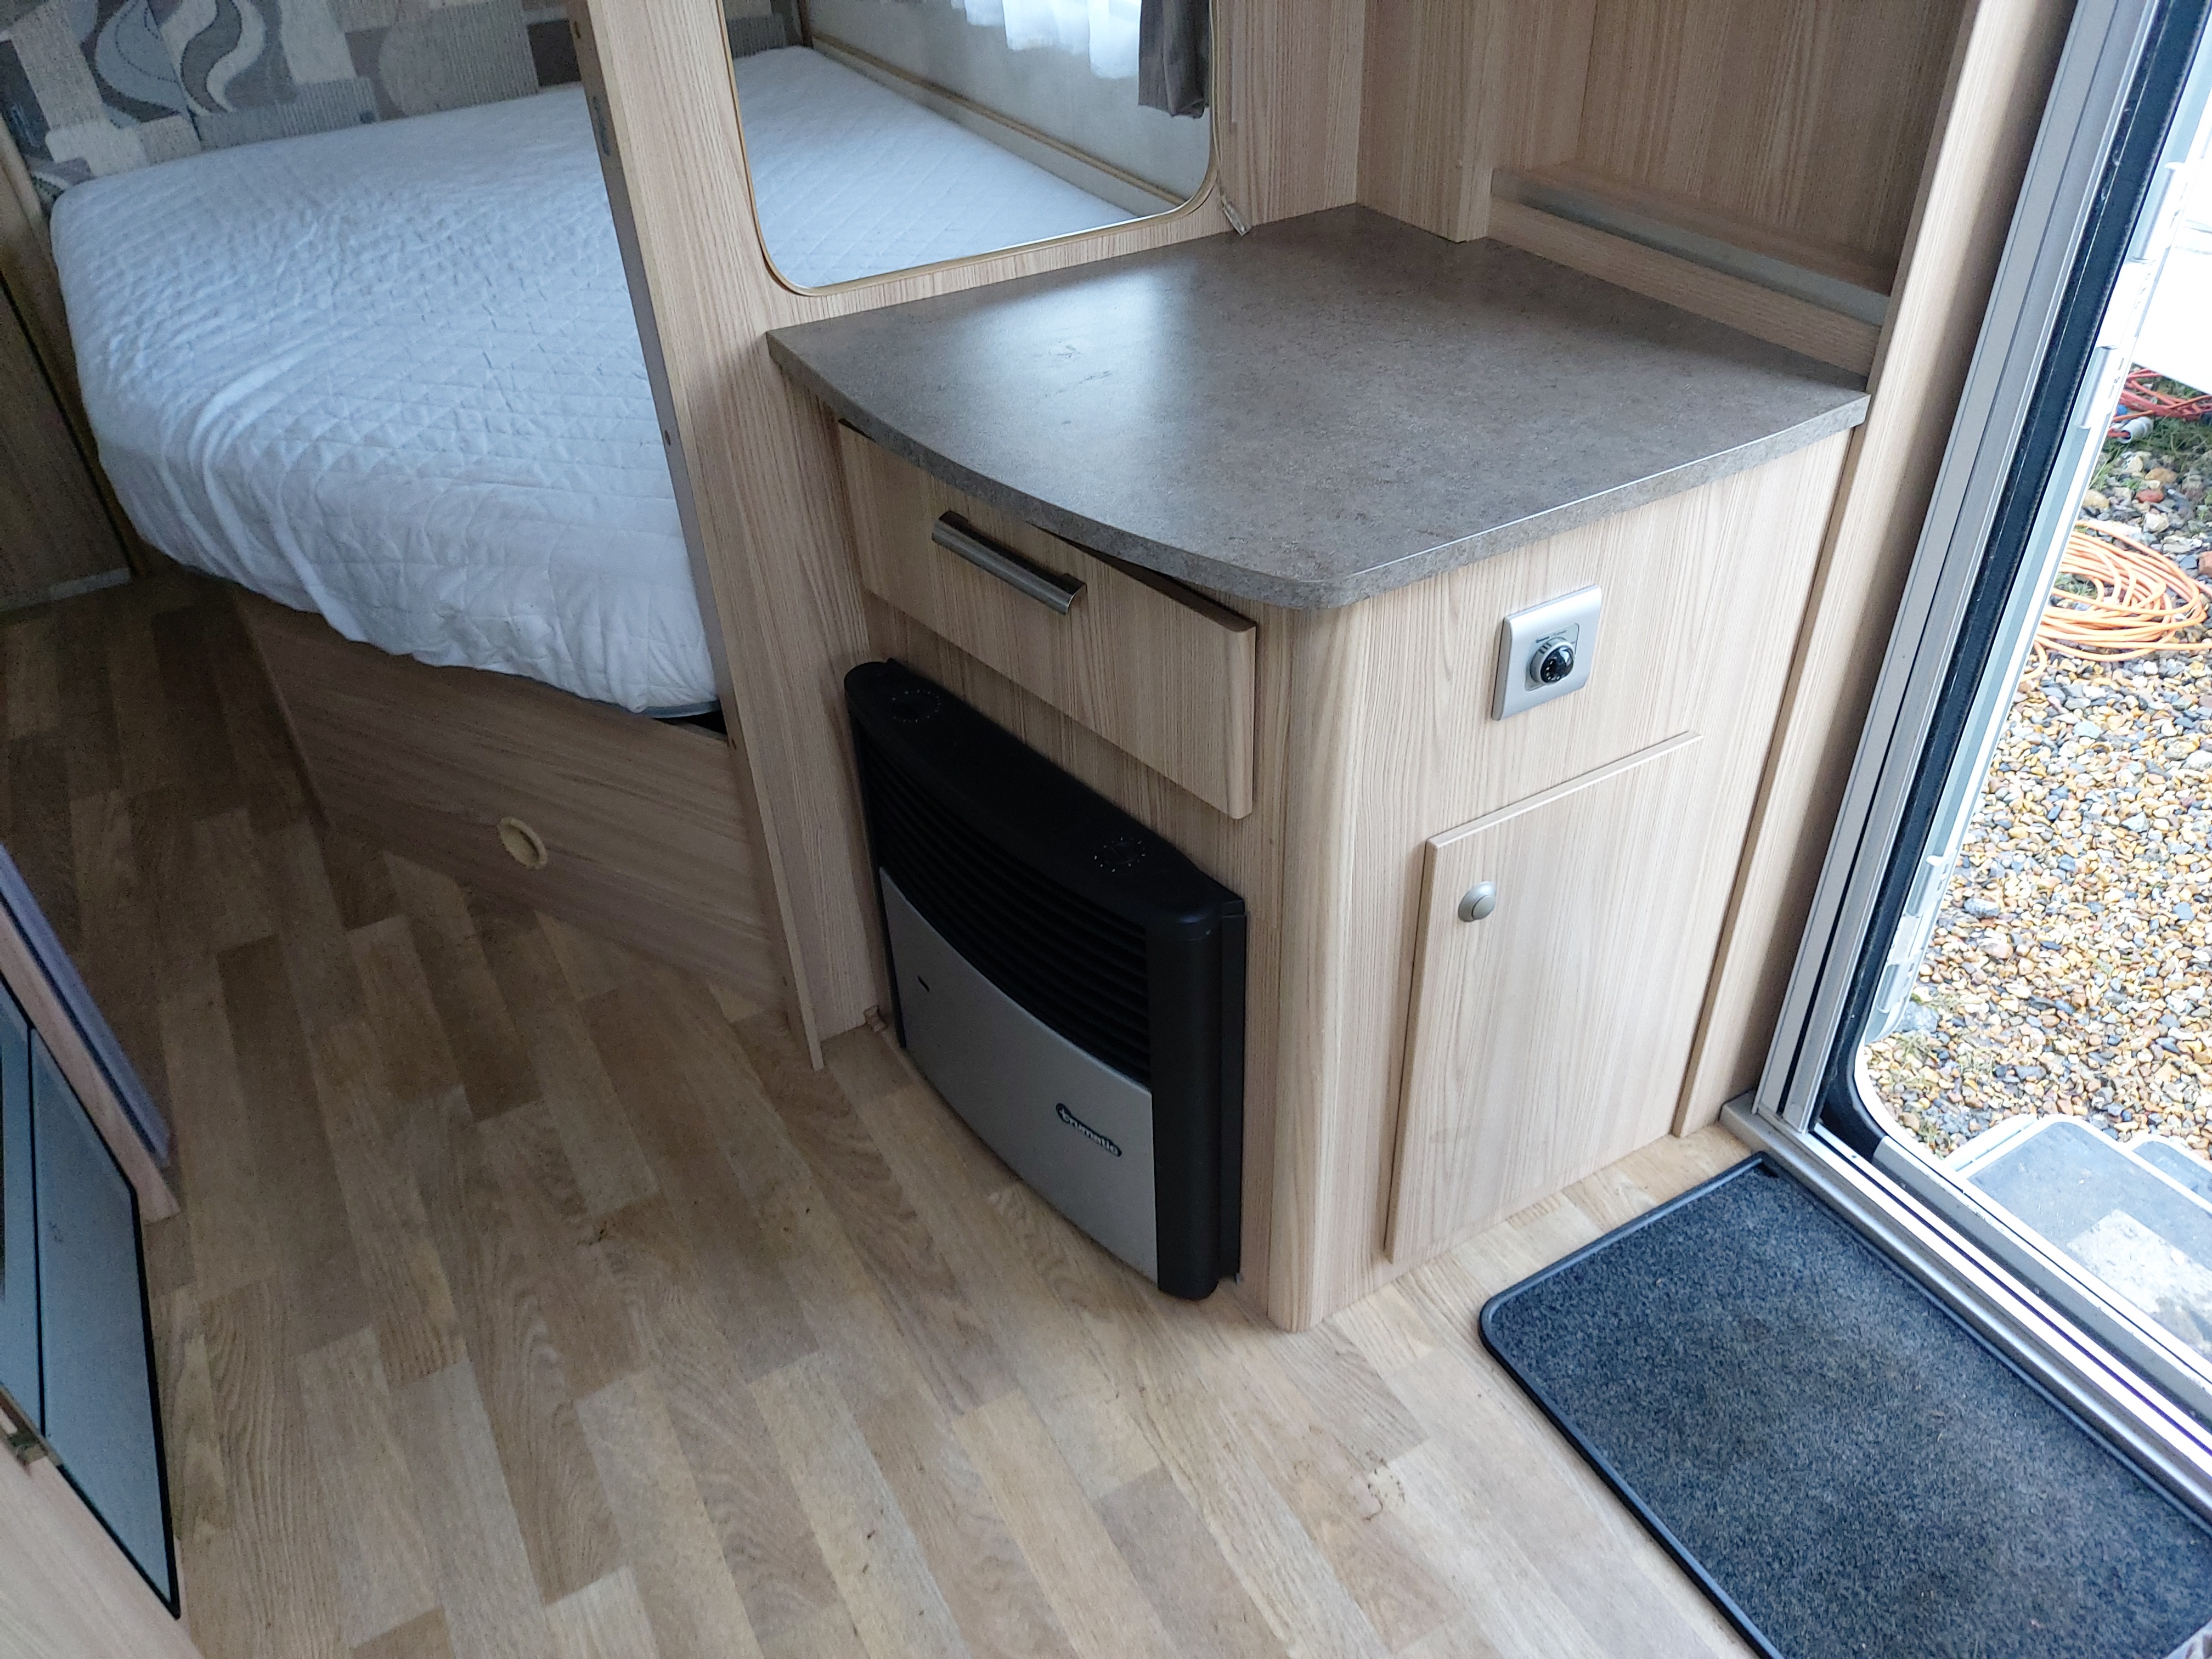 2011 Coachman Amara 560 4 Berth Fixed Bed End Washroom Caravan